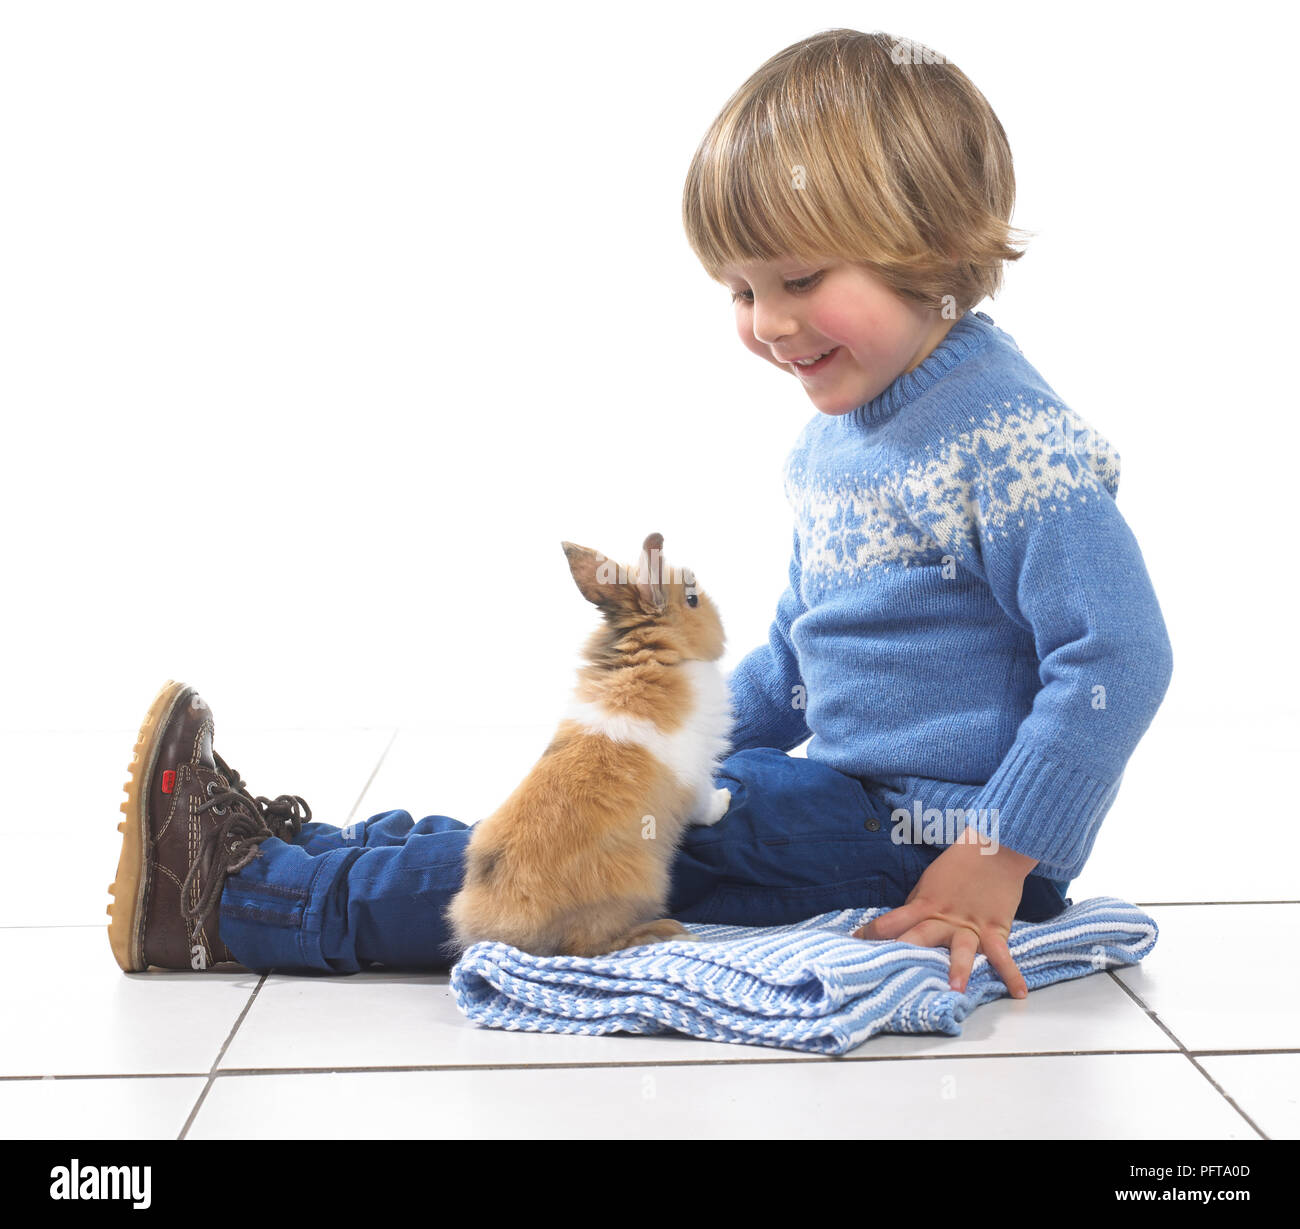 Boy sitting with rabbit on blanket, 3 years Stock Photo